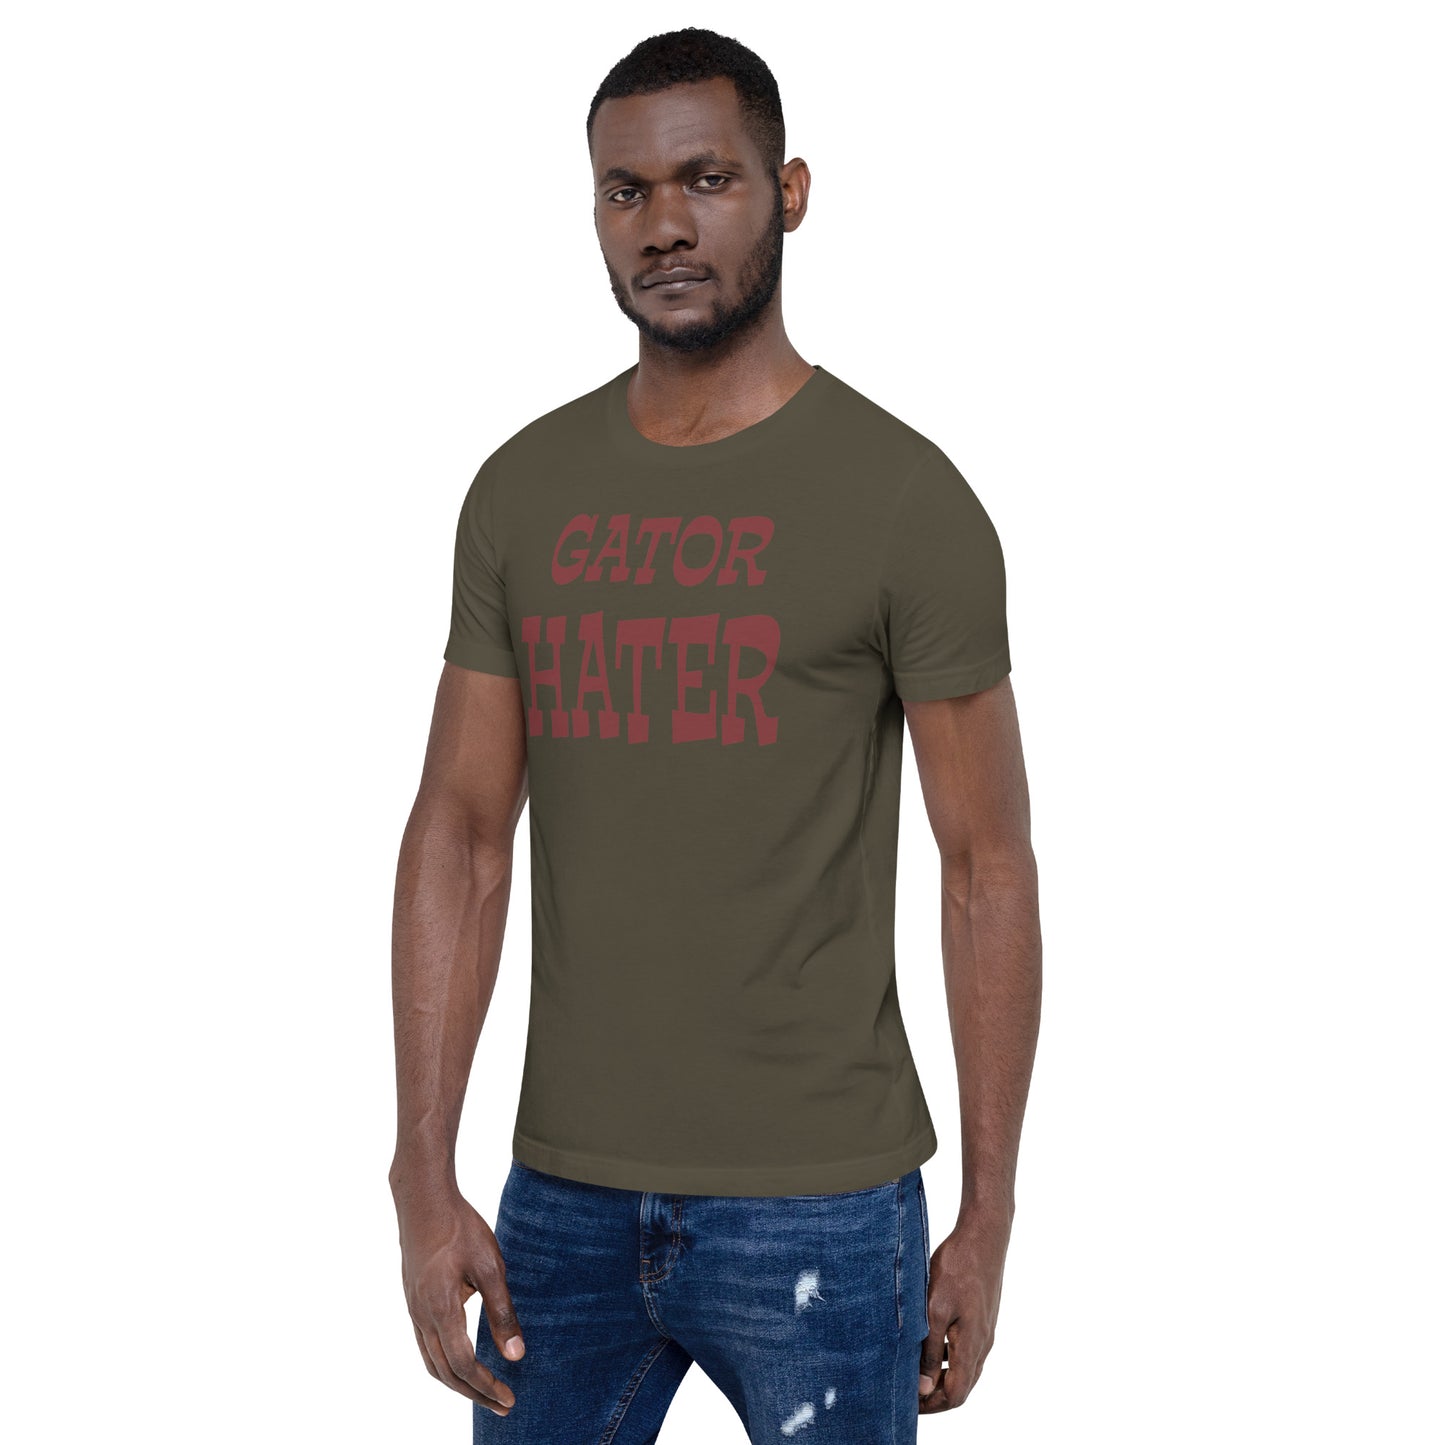 Gator Hater Garnet Logo Unisex t-shirt Plus Sizes